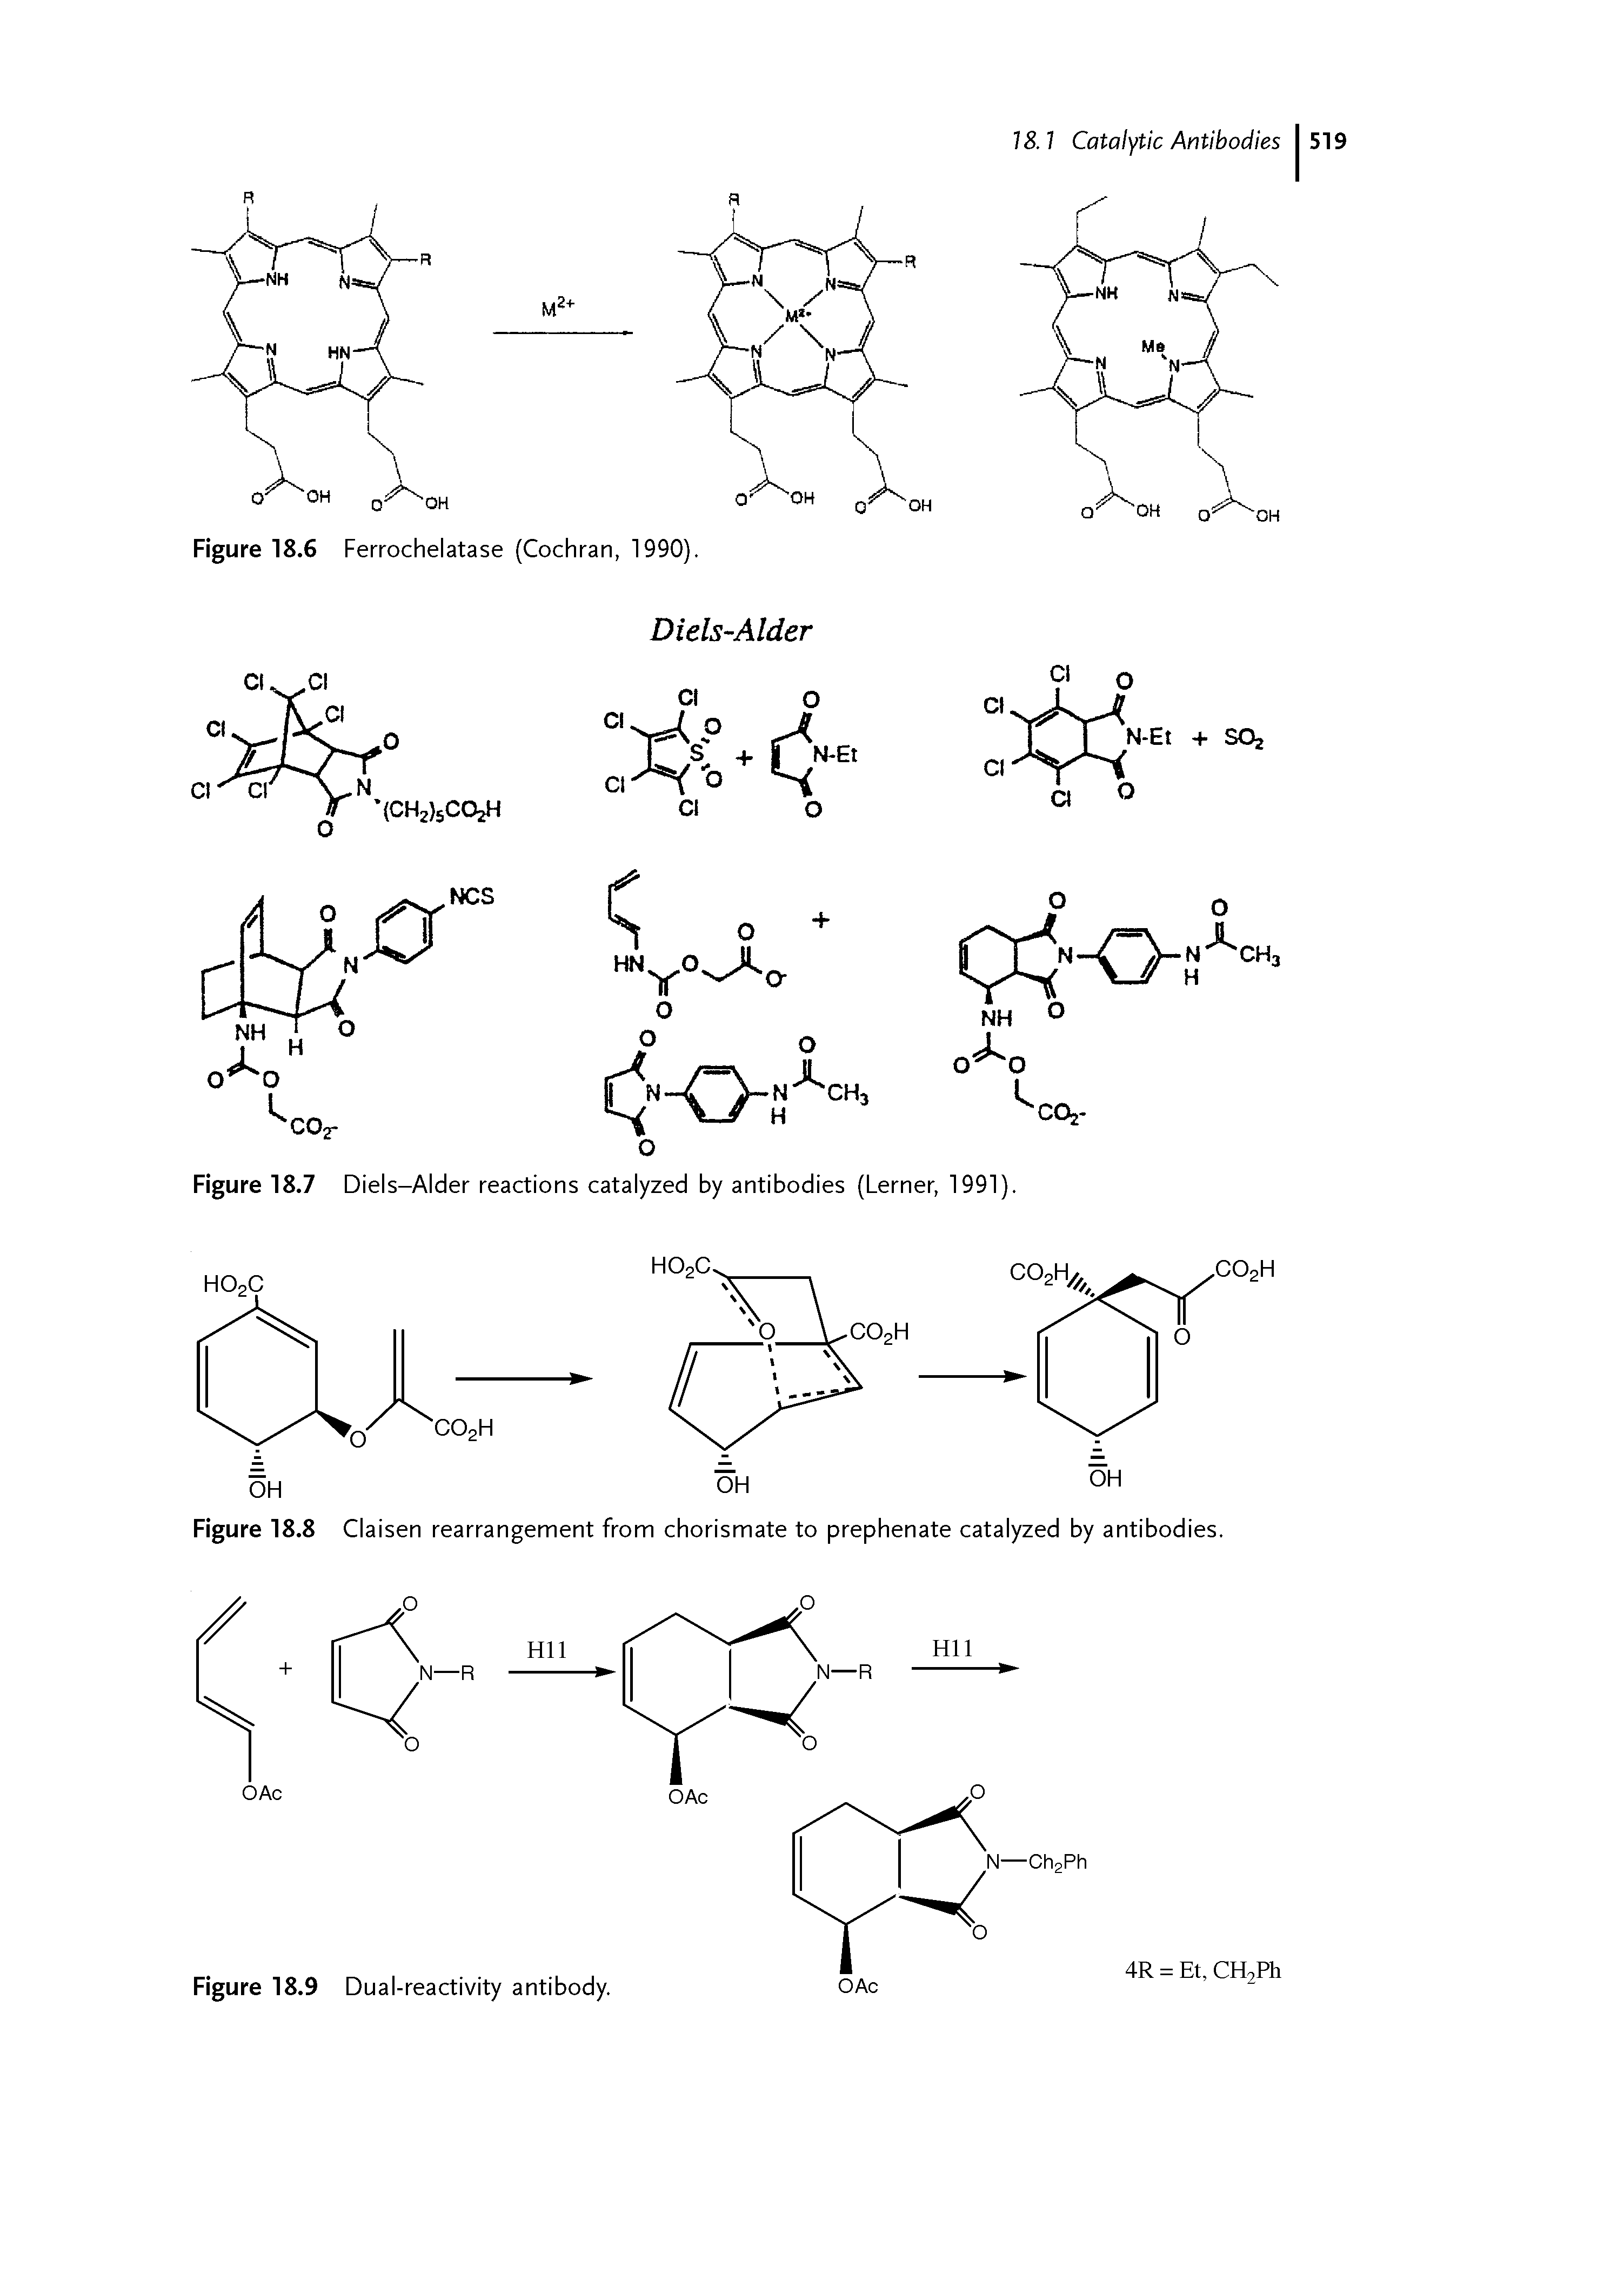 Figure 18.7 Diels-Alder reactions catalyzed by antibodies (Lerner, 1991).